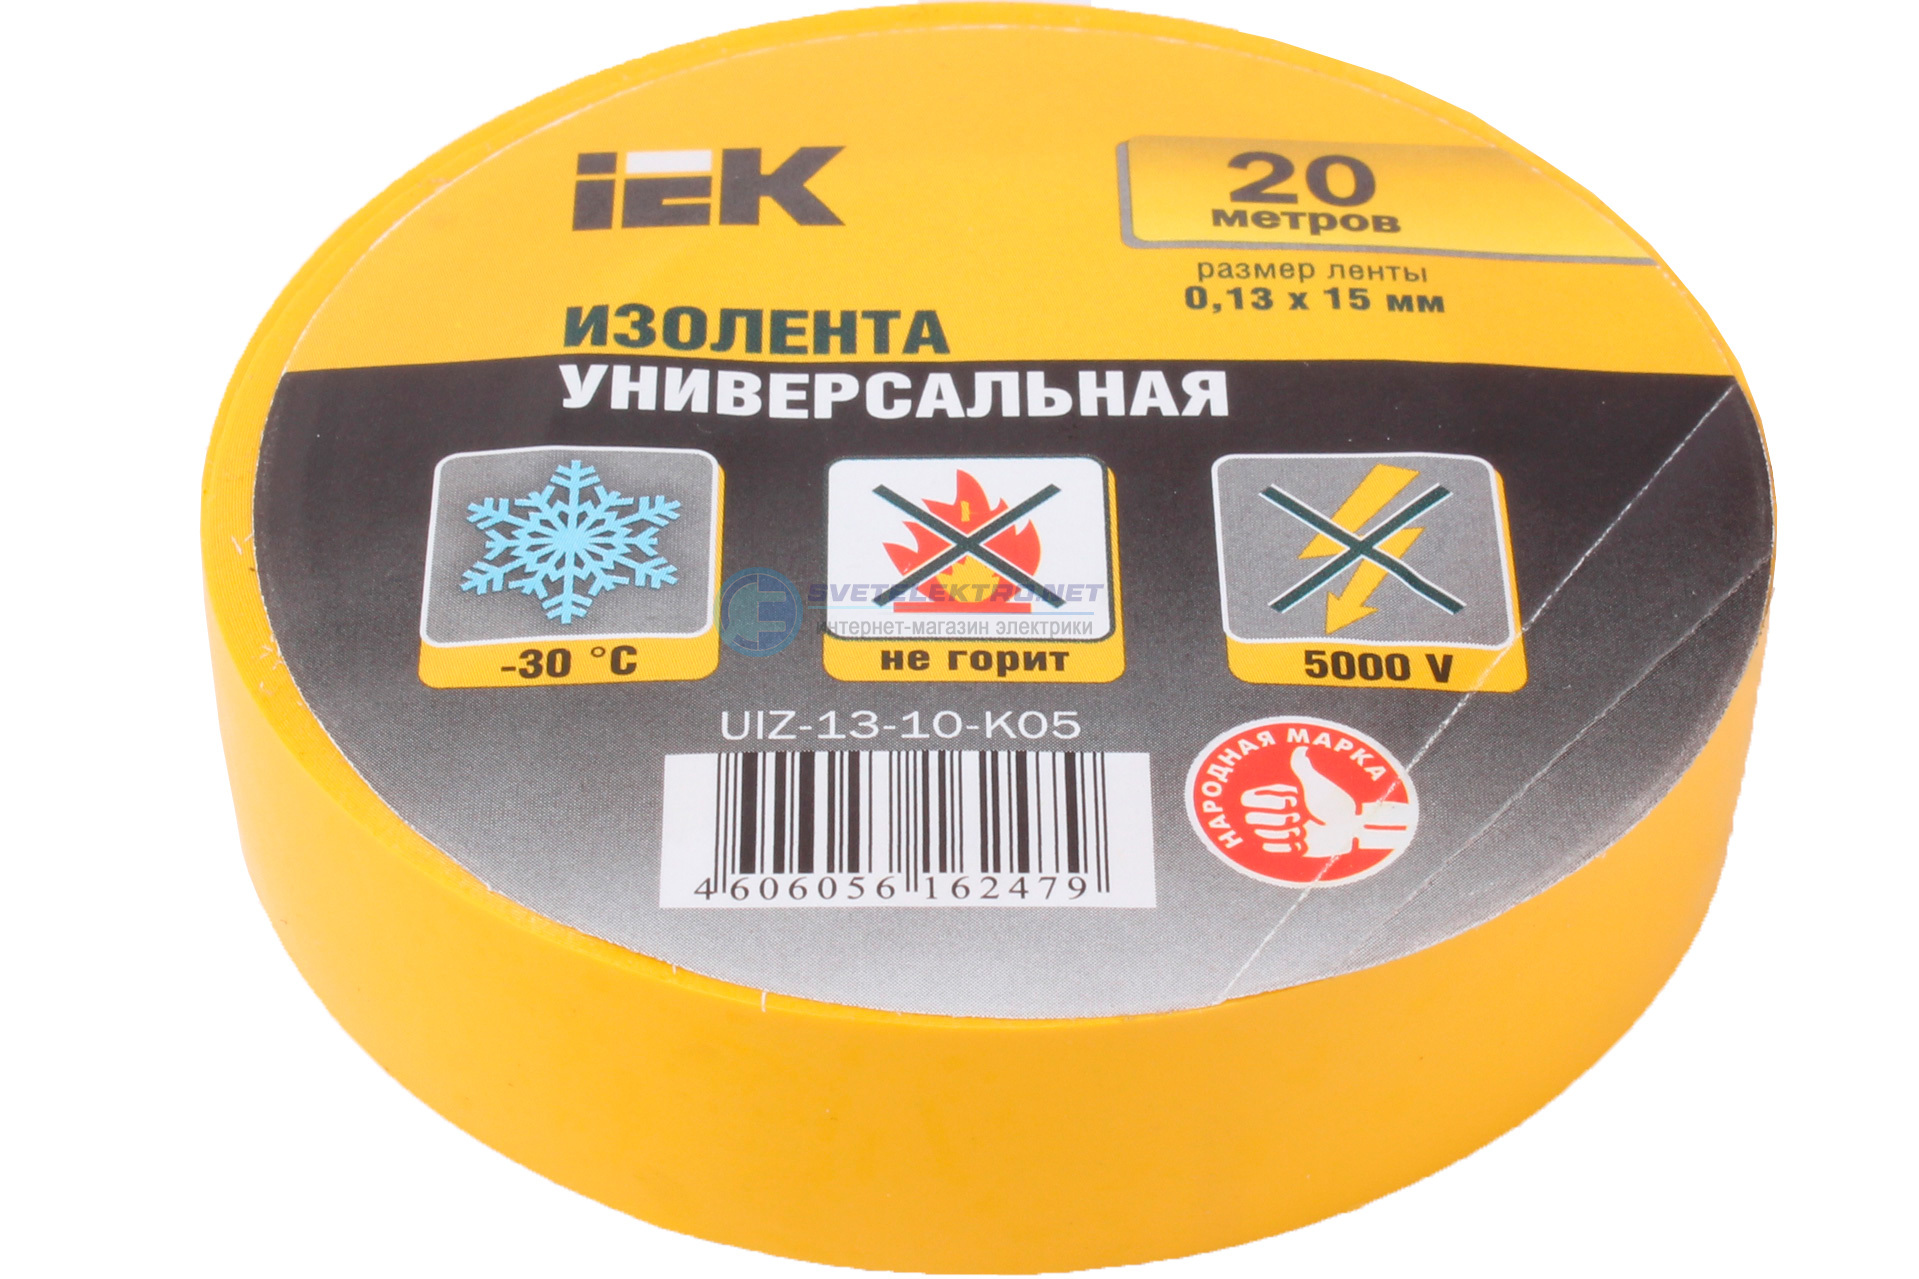 Изолента ПВХ IEK UIZ-13-10-k02 черн 20м. Изолента жёлтая 0,13*16 мм-15 м (47016). Лента электроизоляционная ПВХ 0,13х15 UIZ-13-10-k52 ИЭК желто-зелен. Изолента ПВХ желтая 49-9-024. Изолента пвх uiz